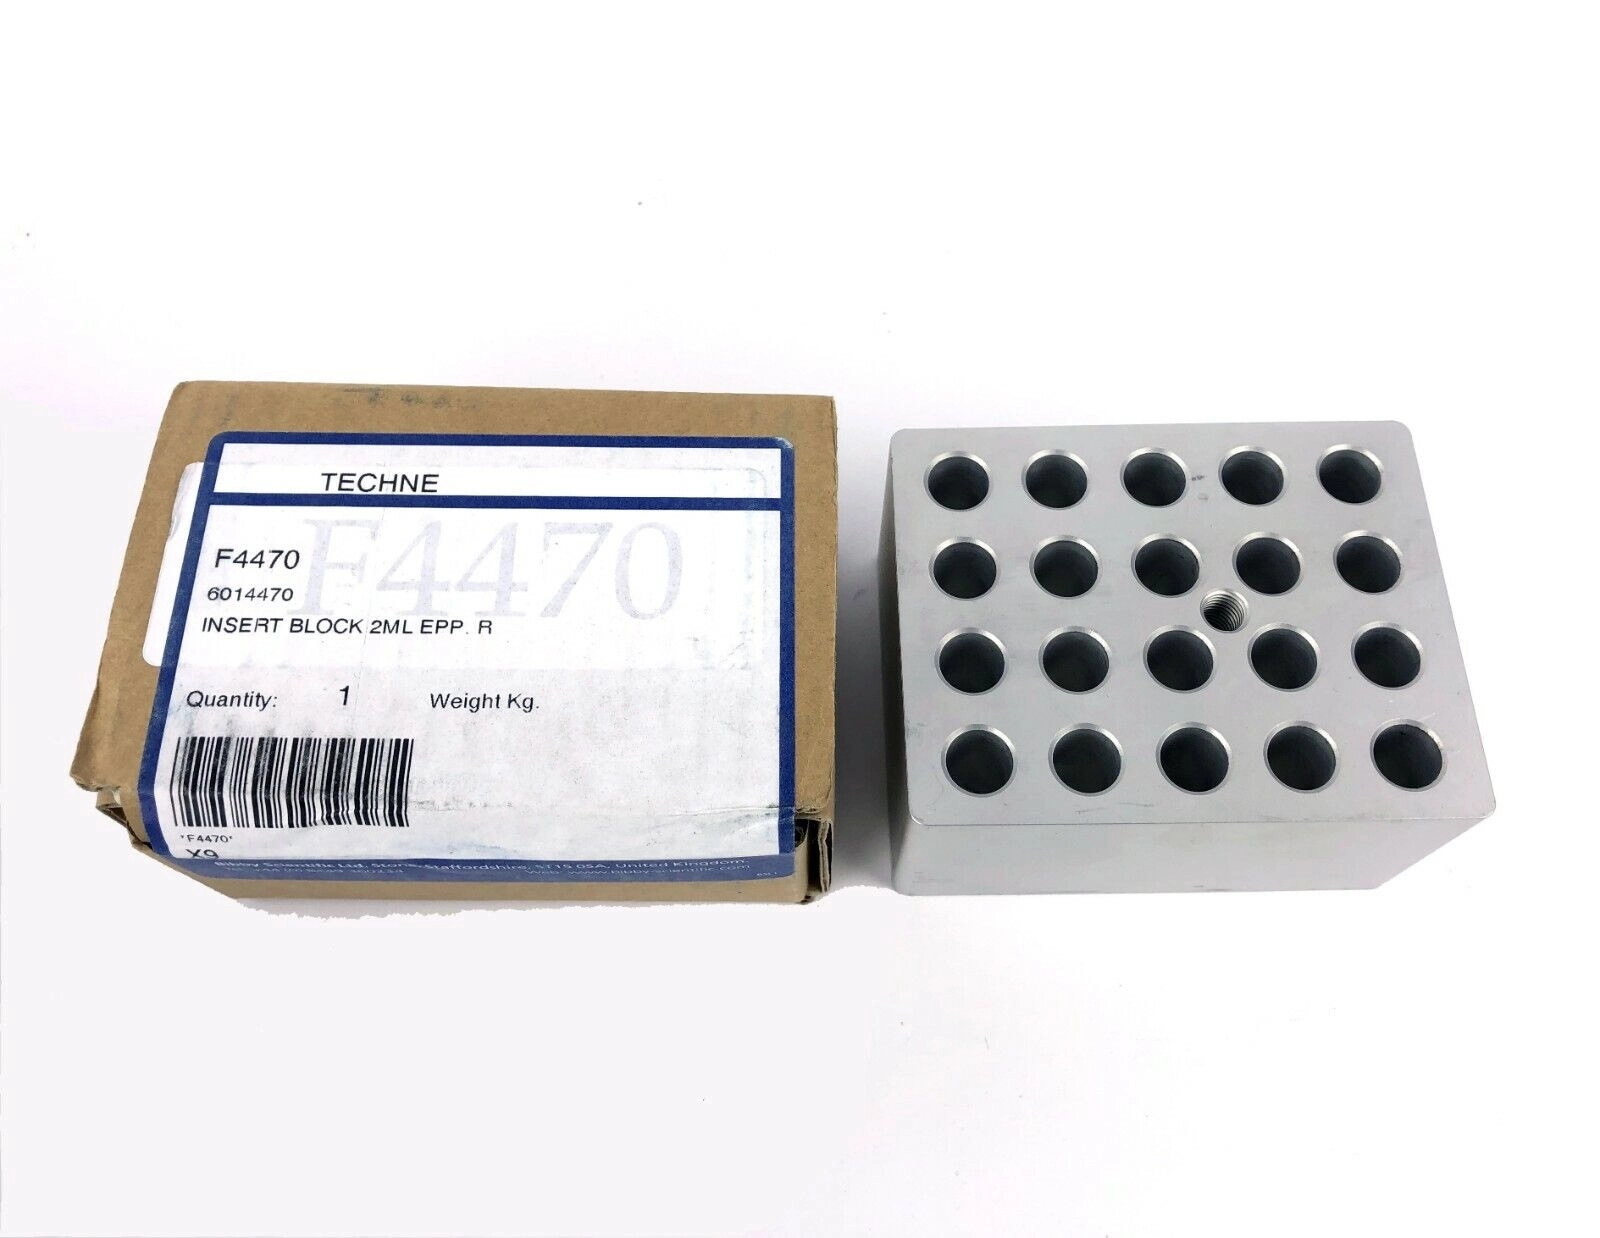 Techne F4470 Aluminium Dri-Block Fentes, 2.0ml/20 